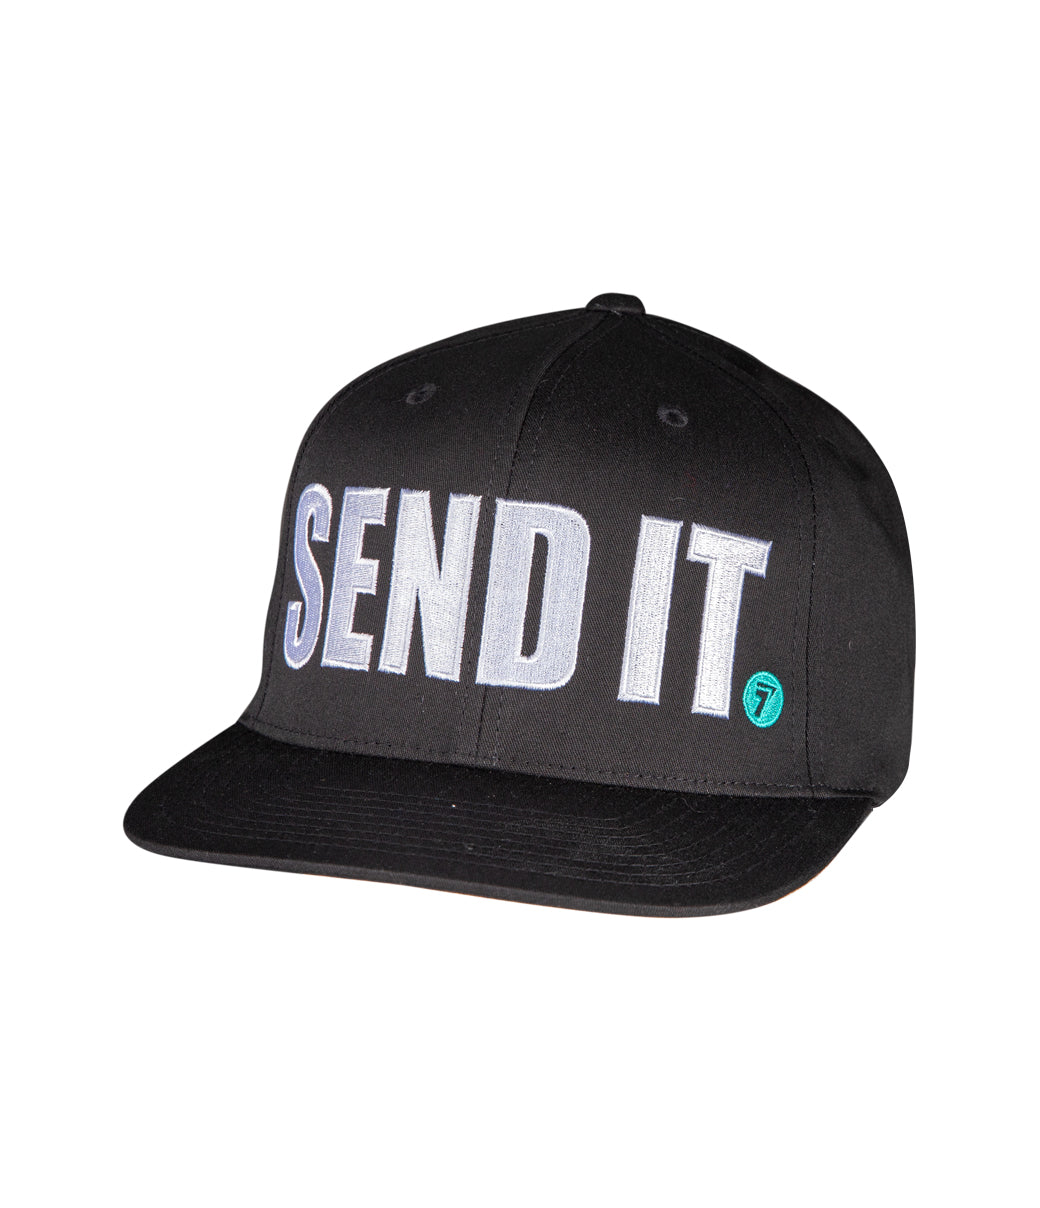 Send It Hat Black